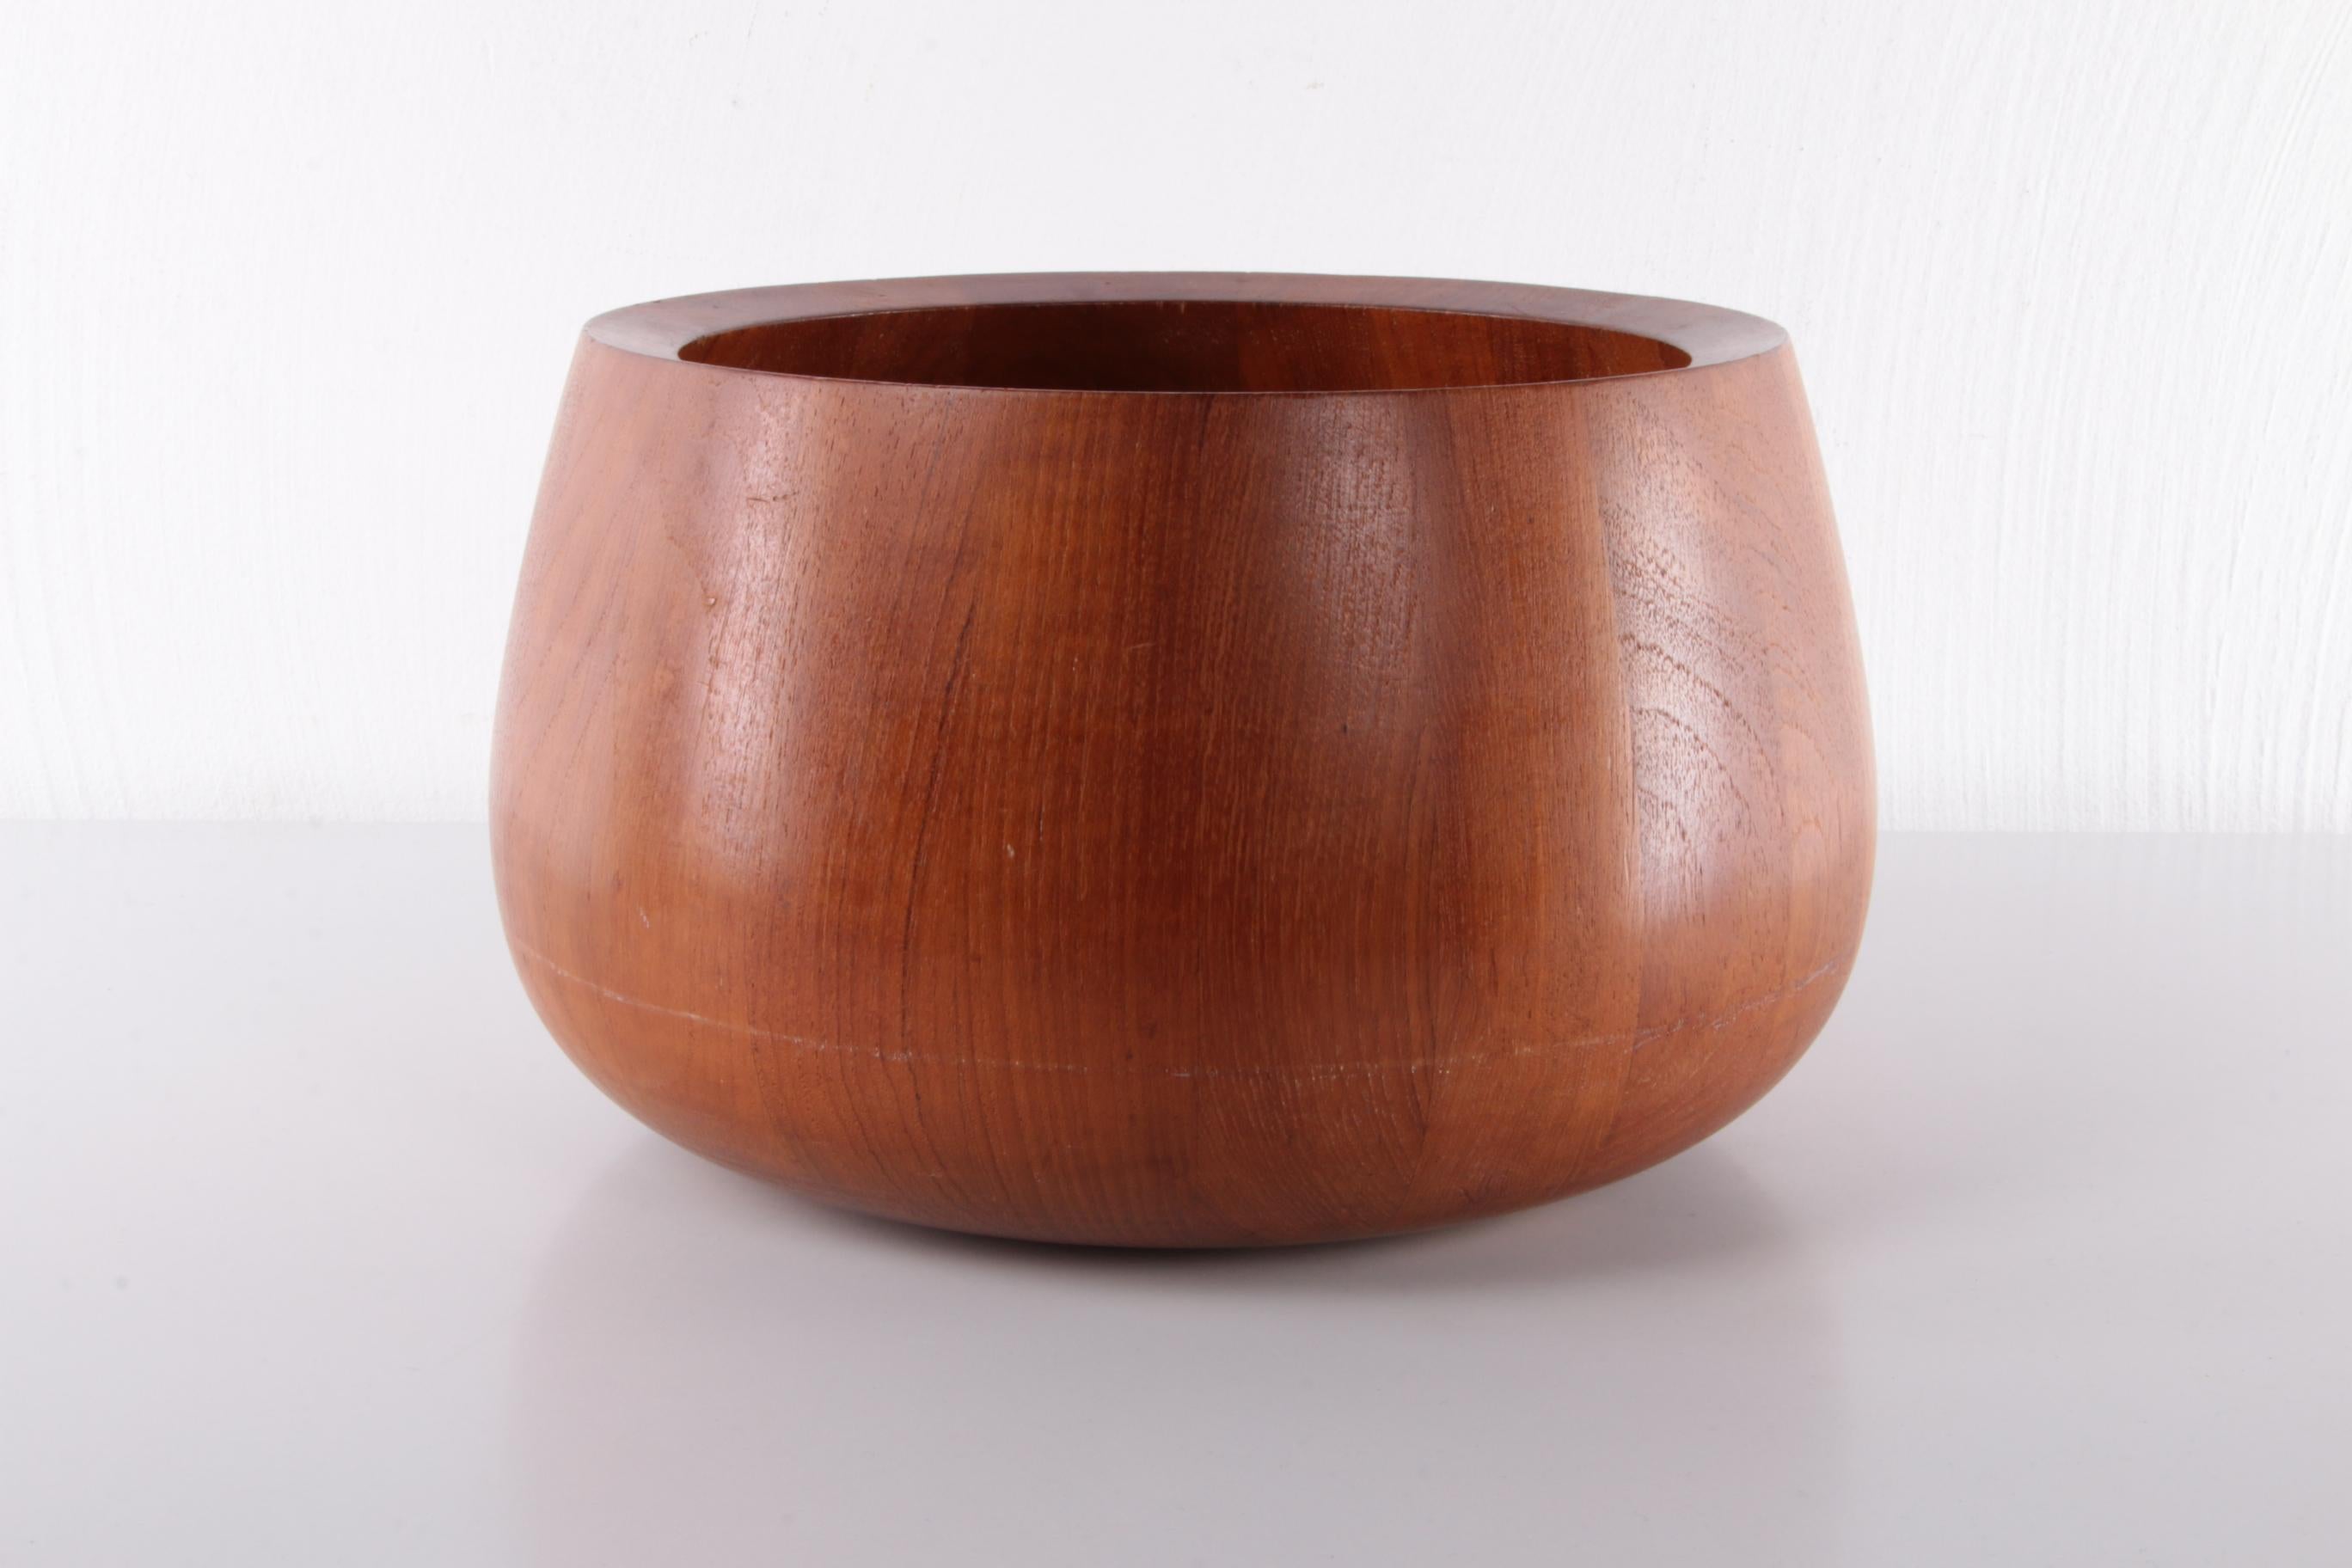 Scandinavian Modern Jens Quistgaard Teak Wooden Bowl with Salad Cutlery by Dansk Design